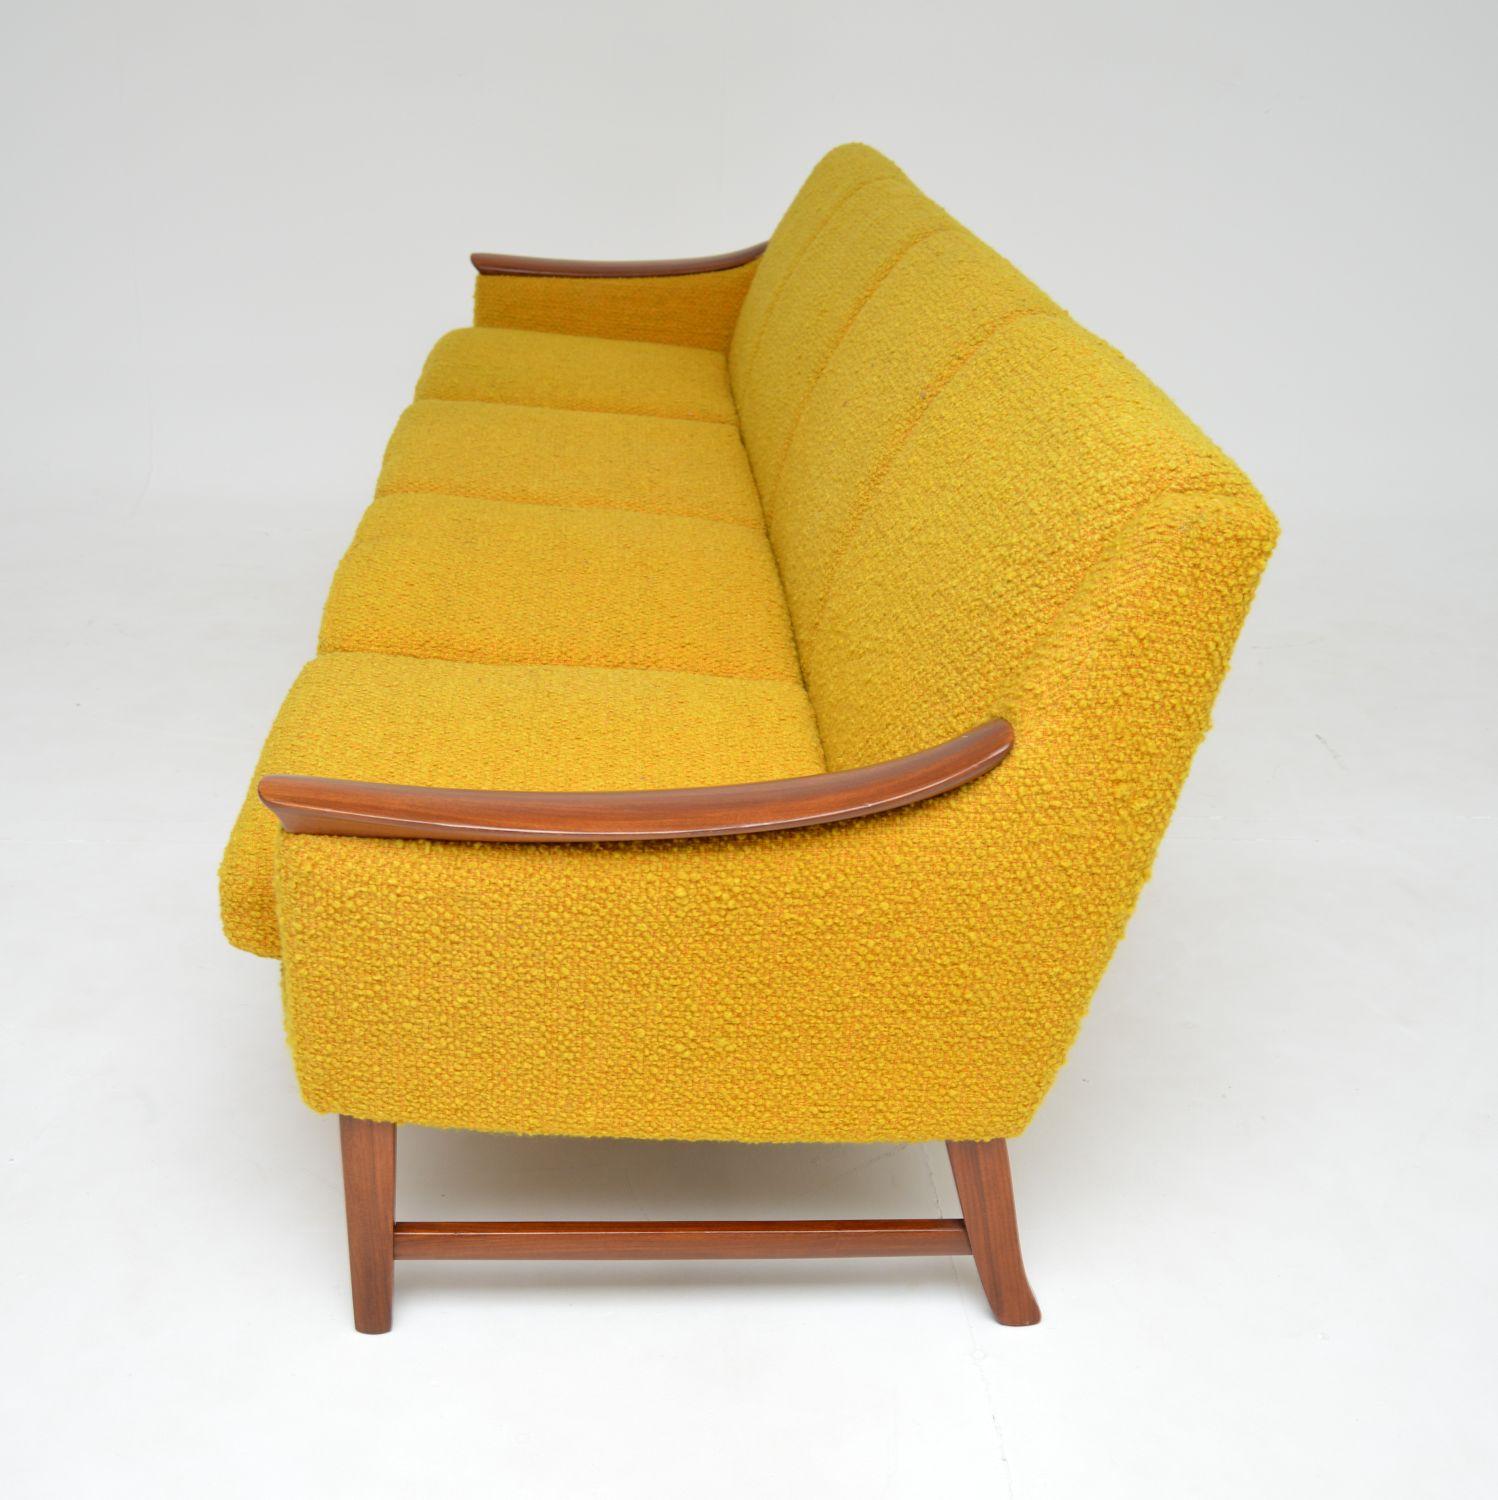 20th Century 1960's Norwegian Vintage Teak Sofa in Mustard Yellow Boucle